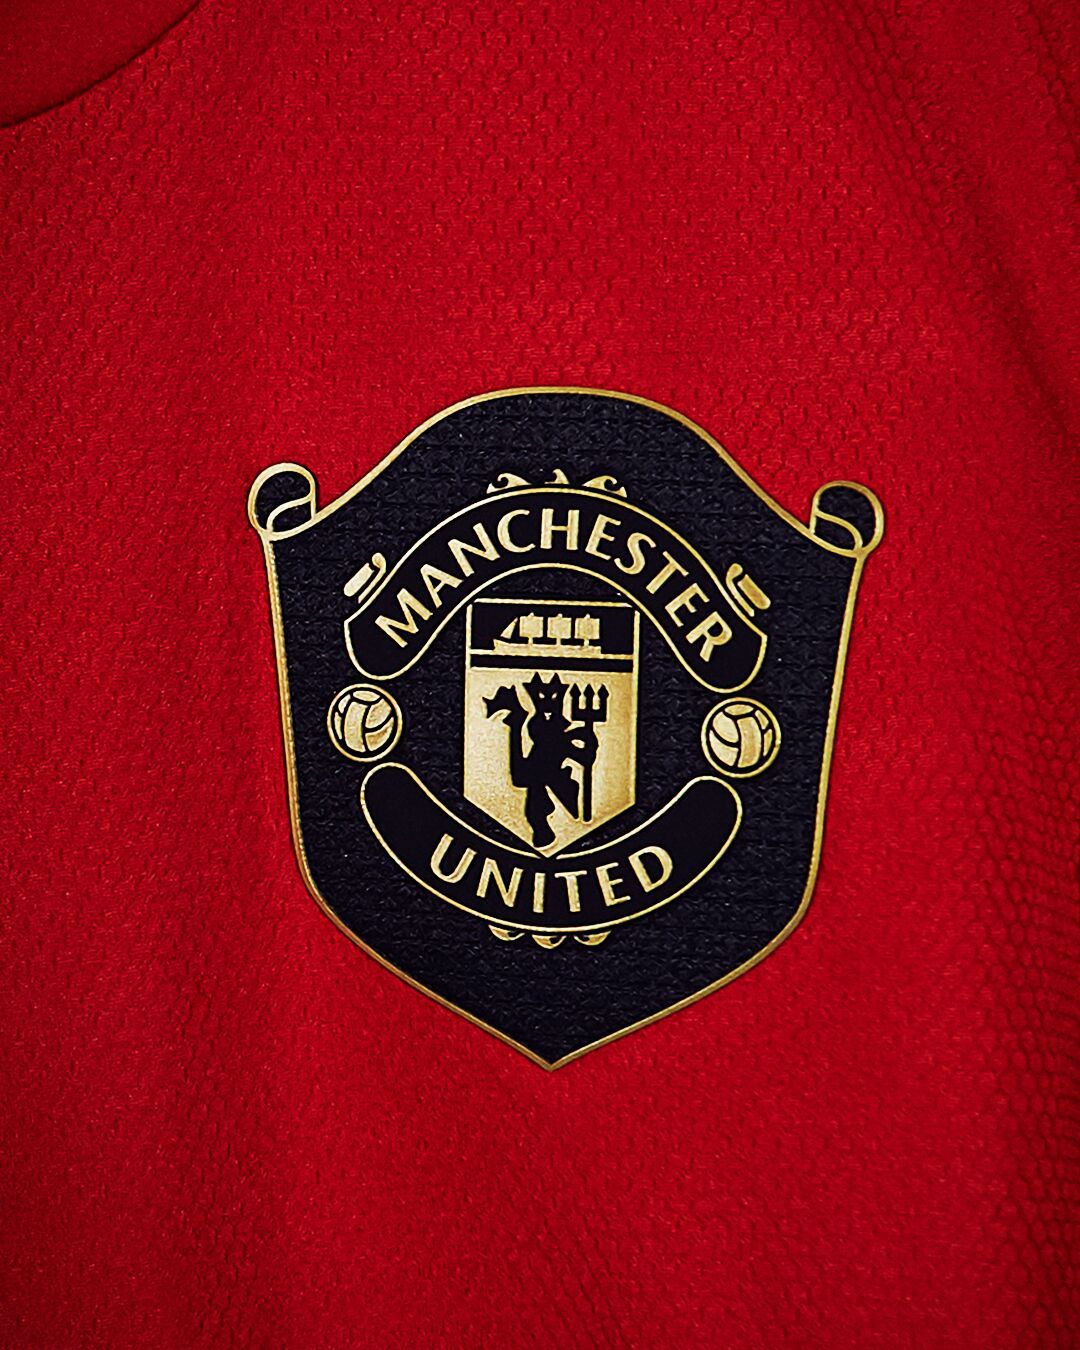 New Manchester United 19/20 home shirt celebrating treble anniversary ...